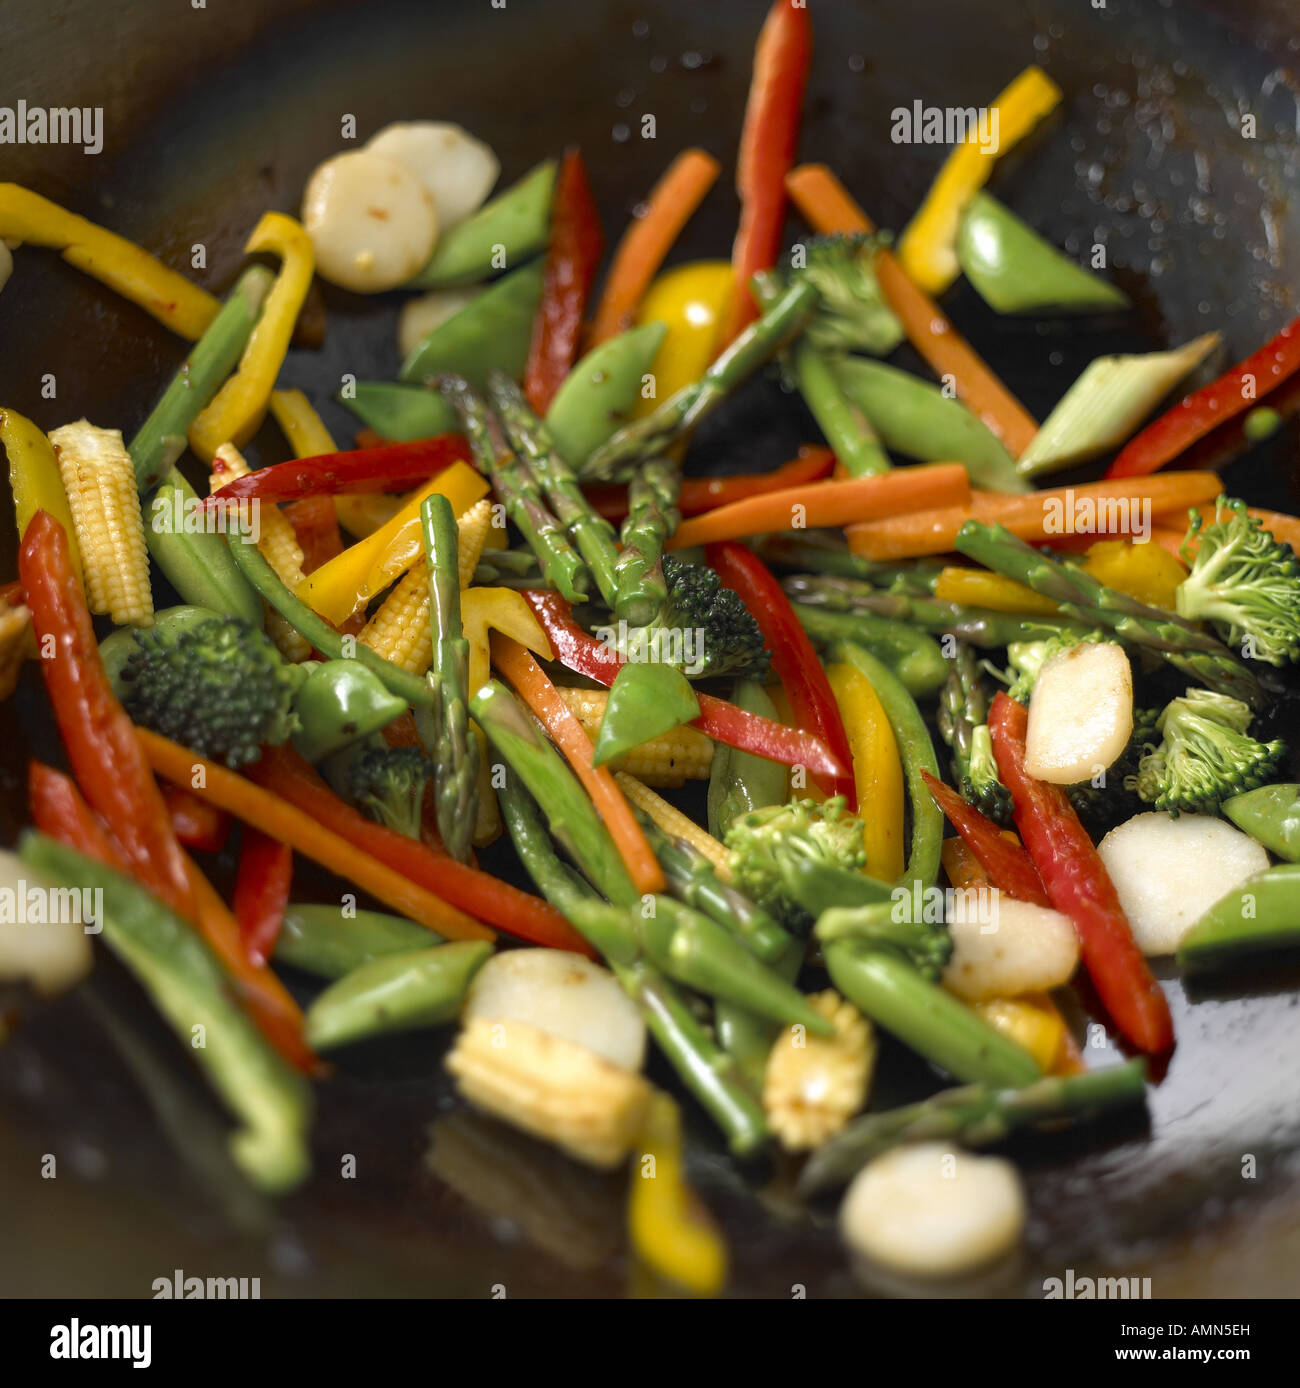 Stir fry ingredients in wok Stock Photo